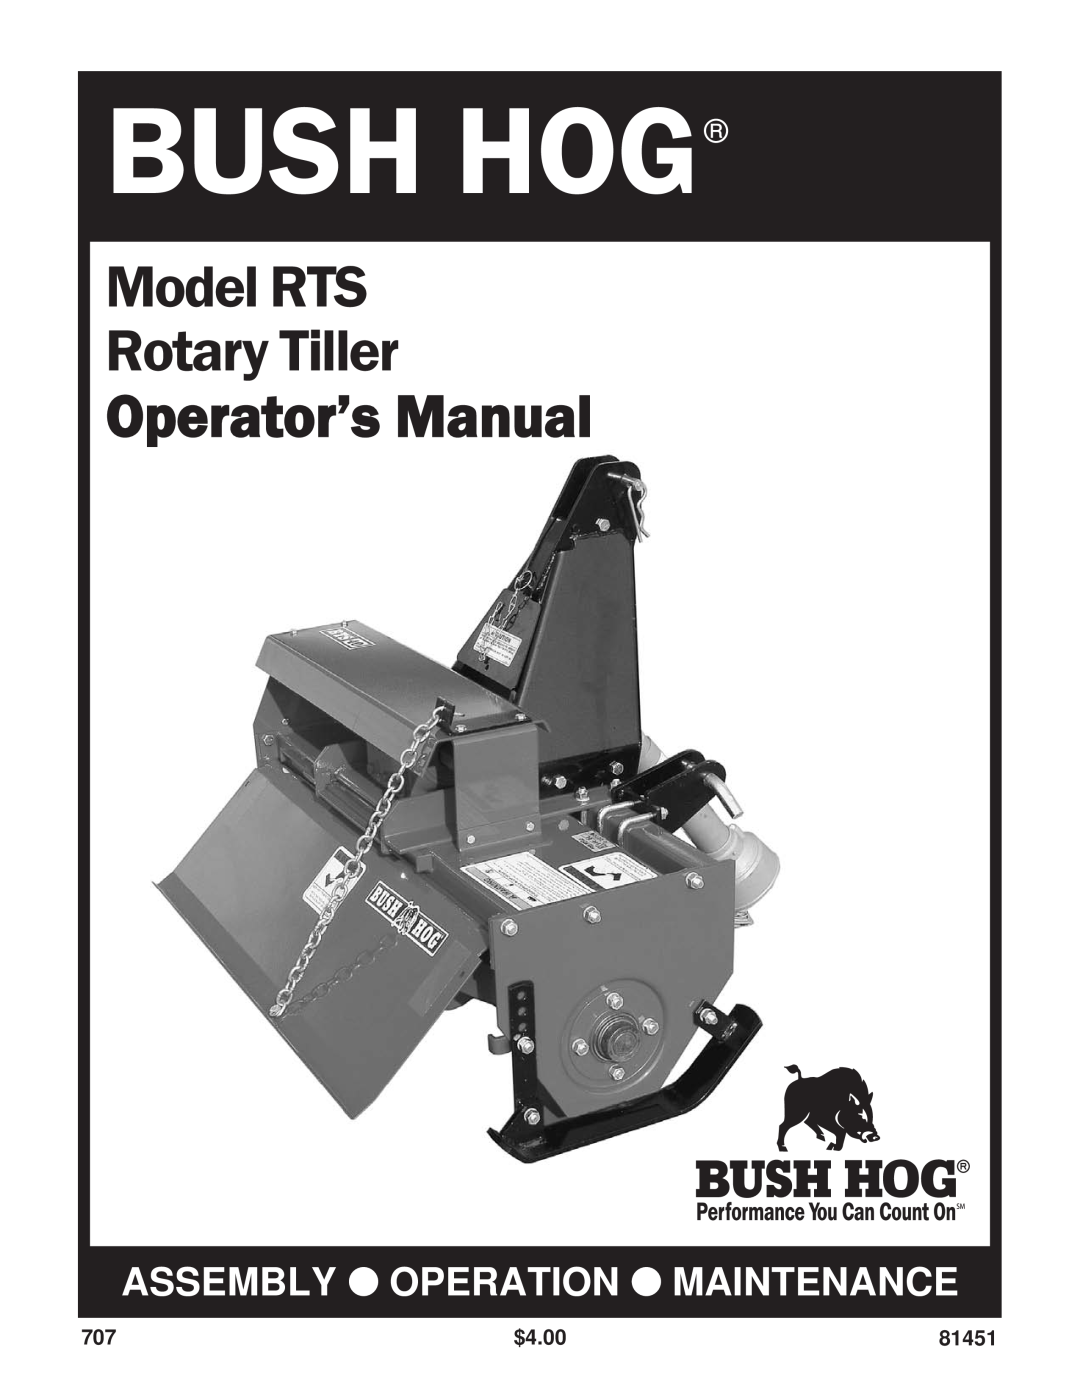 Bush Hog manual $4.00, 81451, Bush Hog, Model RTS Rotary Tiller Operator’s Manual, Assembly Operation Maintenance 